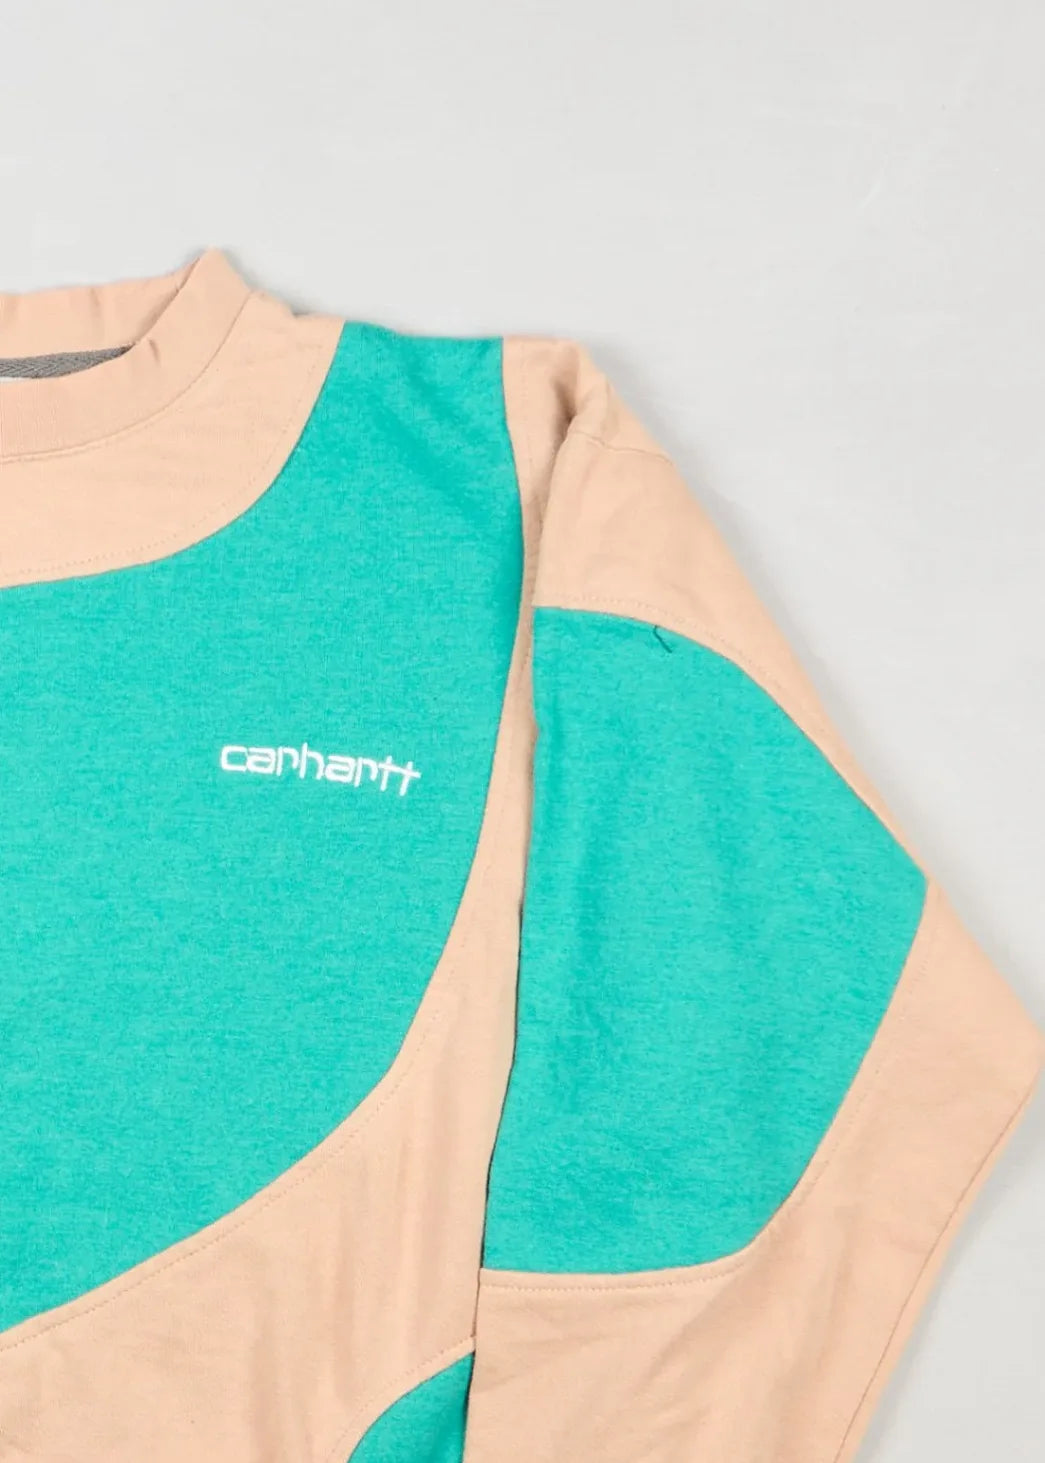 Carhartt - Sweatshirt (M) Right